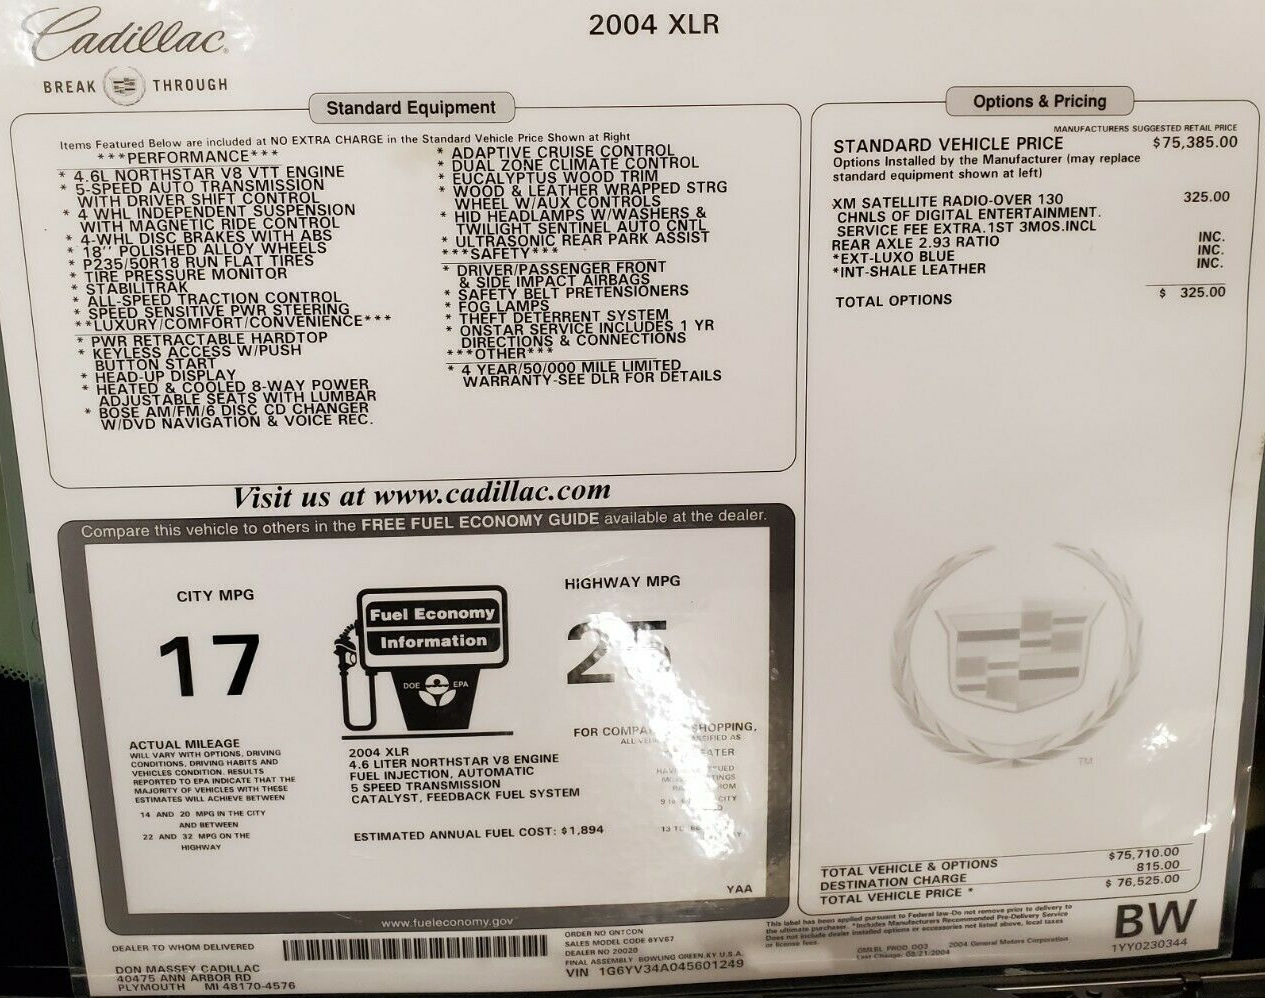 2004 Cadillac XLR - Number 1249 - Window Sticker